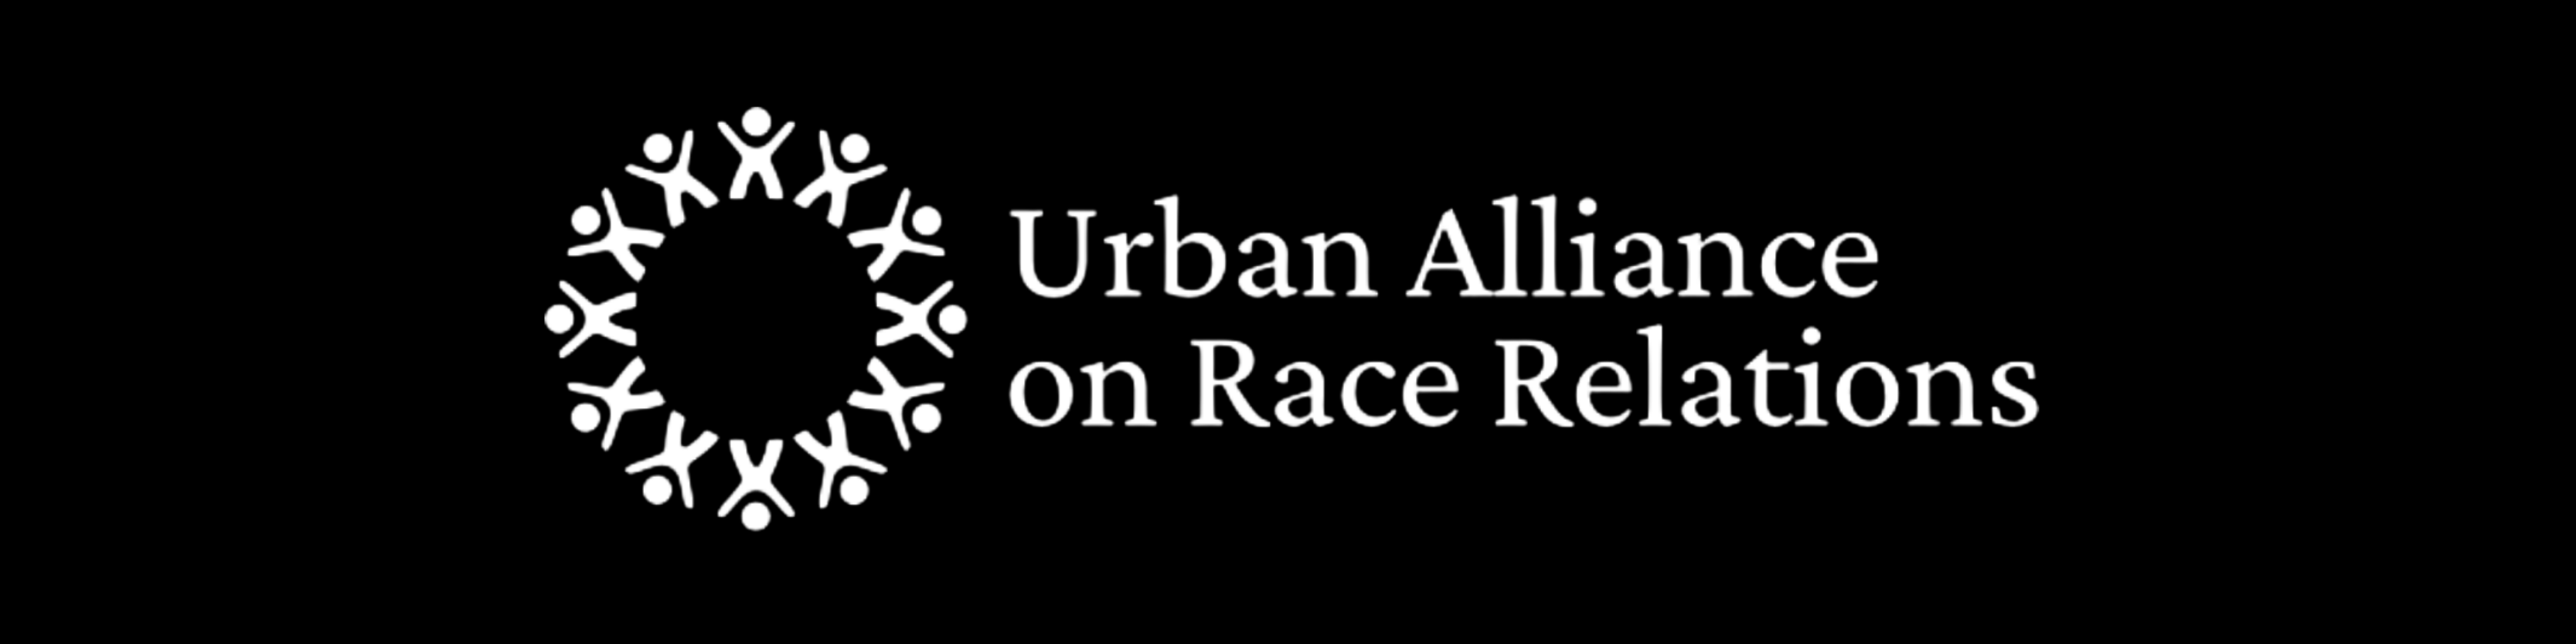 Urban Alliance on Race Relations